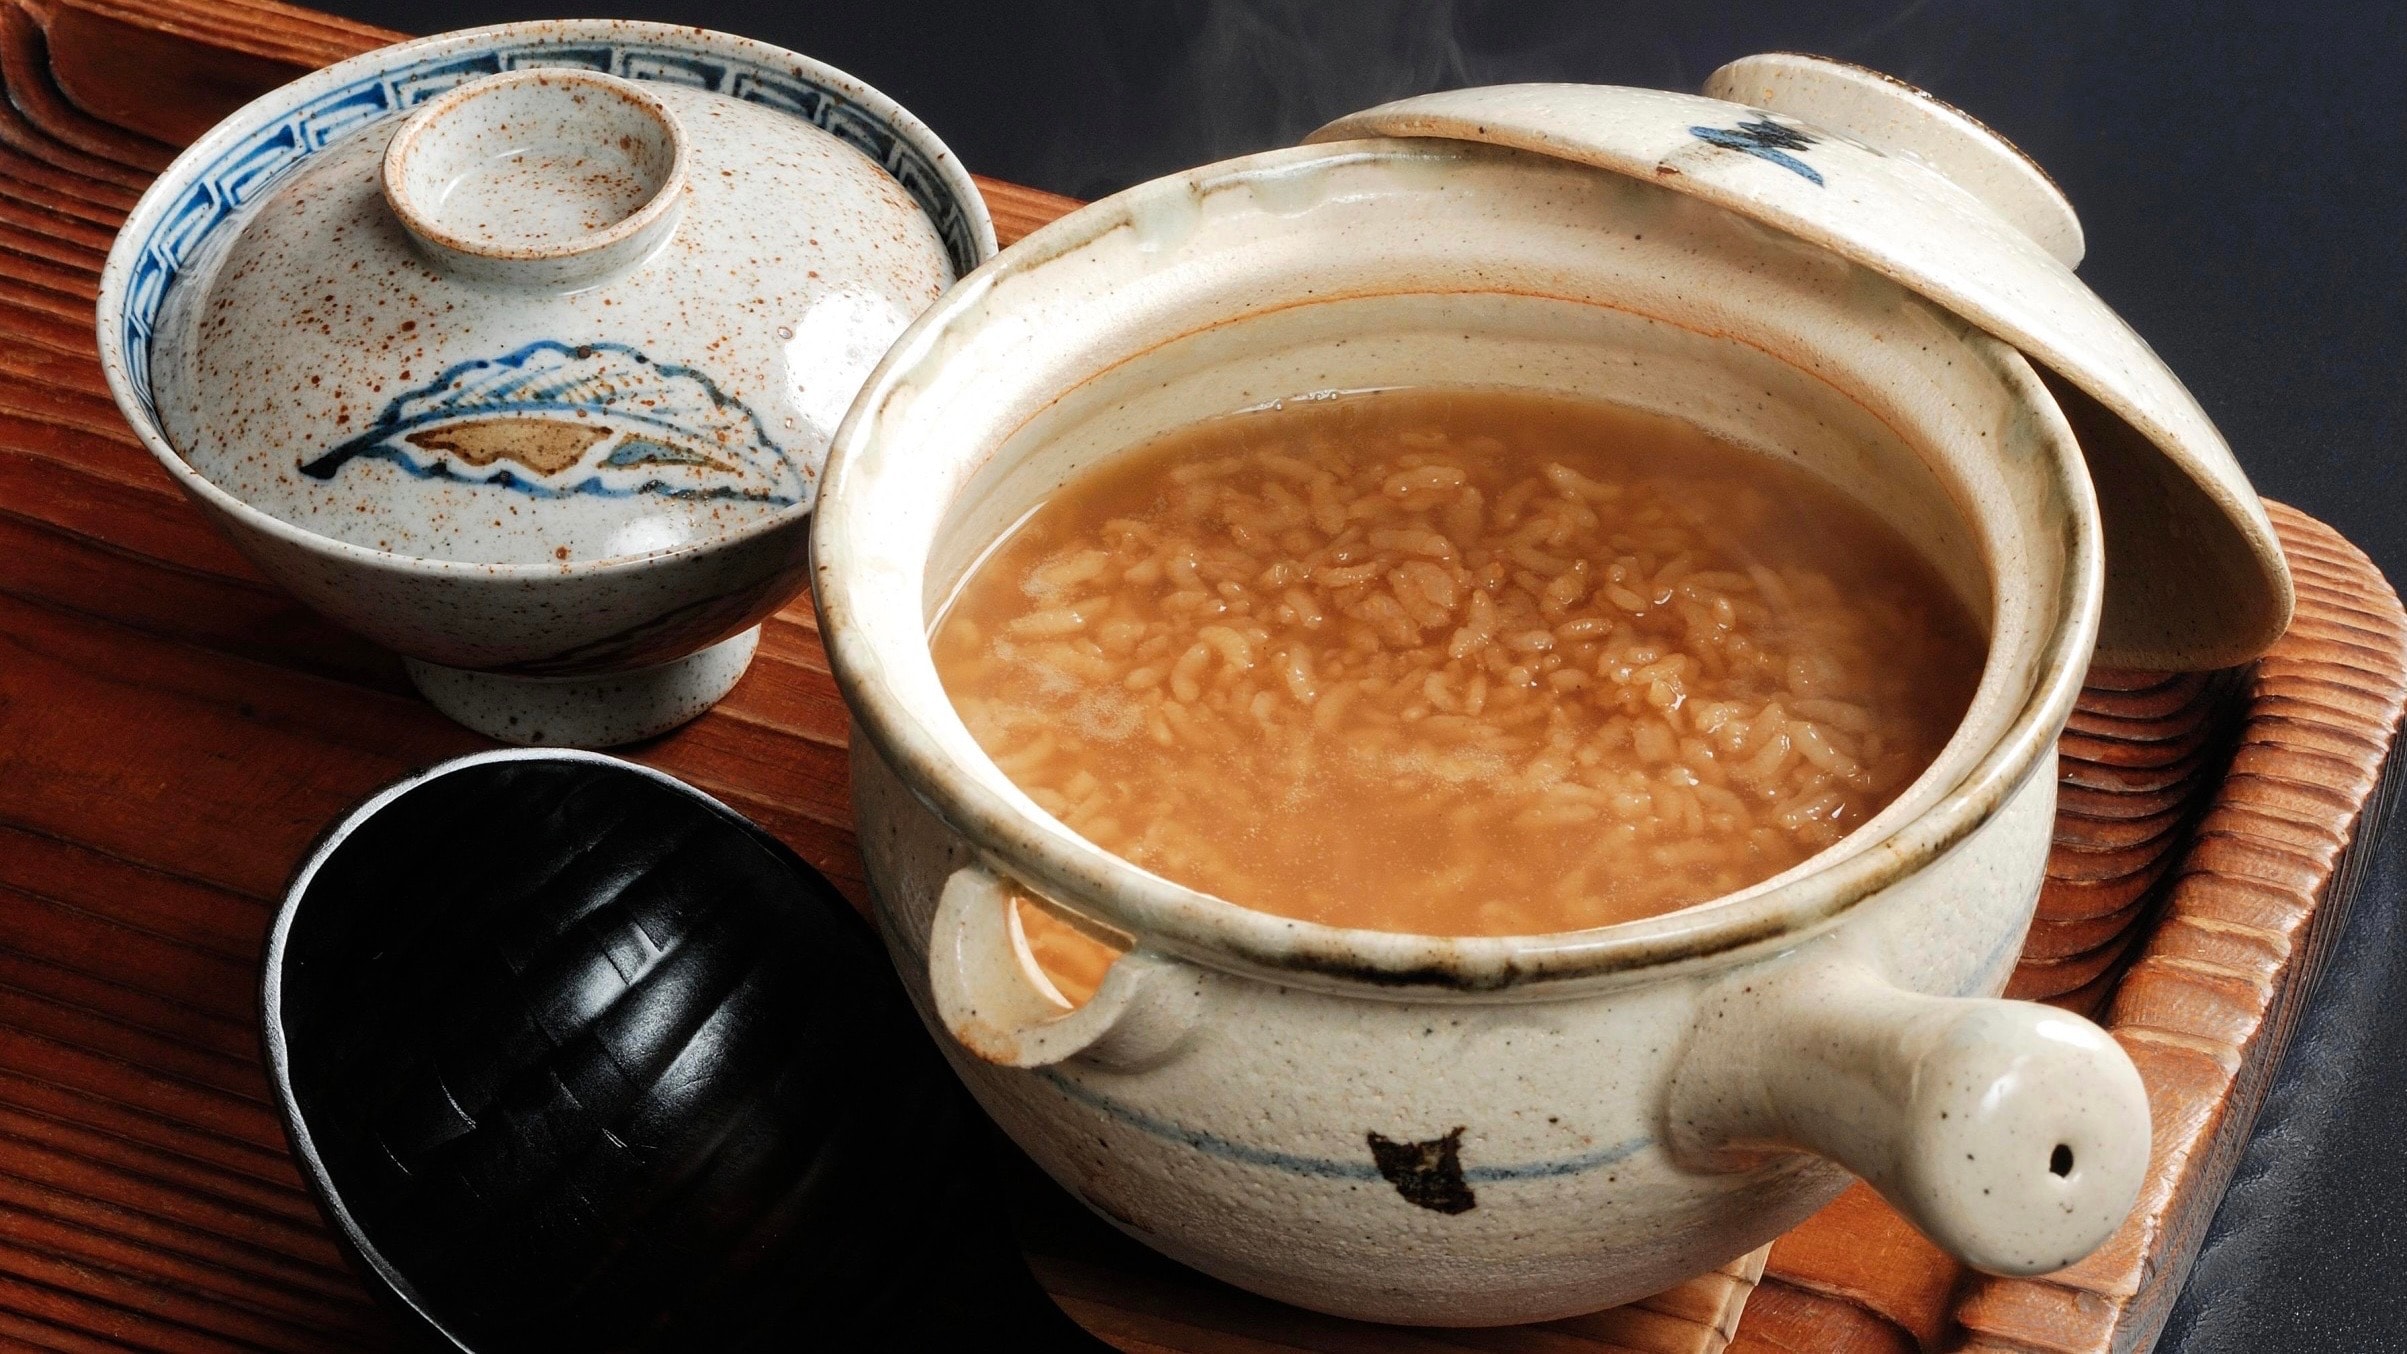 [Breakfast] Yoshino's morning waking up with tea porridge soaked in...